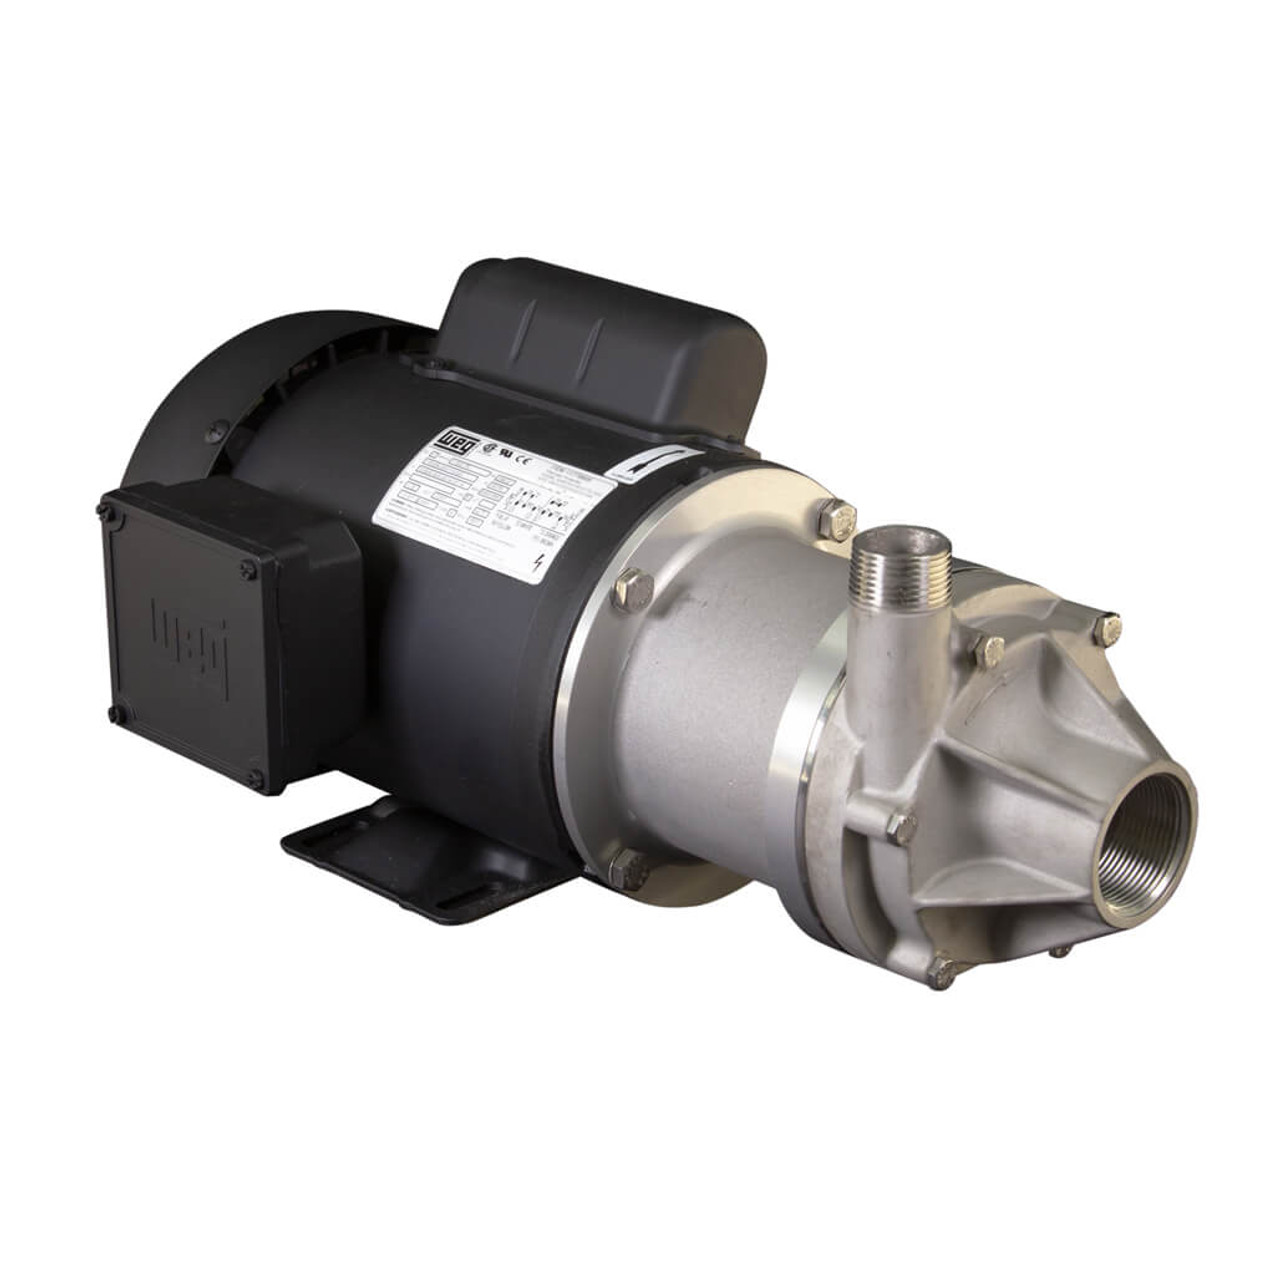 March Pumps - TE-7S-MD 575V 3Ph 1HP PL Bkt, Magnetic Drive Pump - 0155-0351-0100